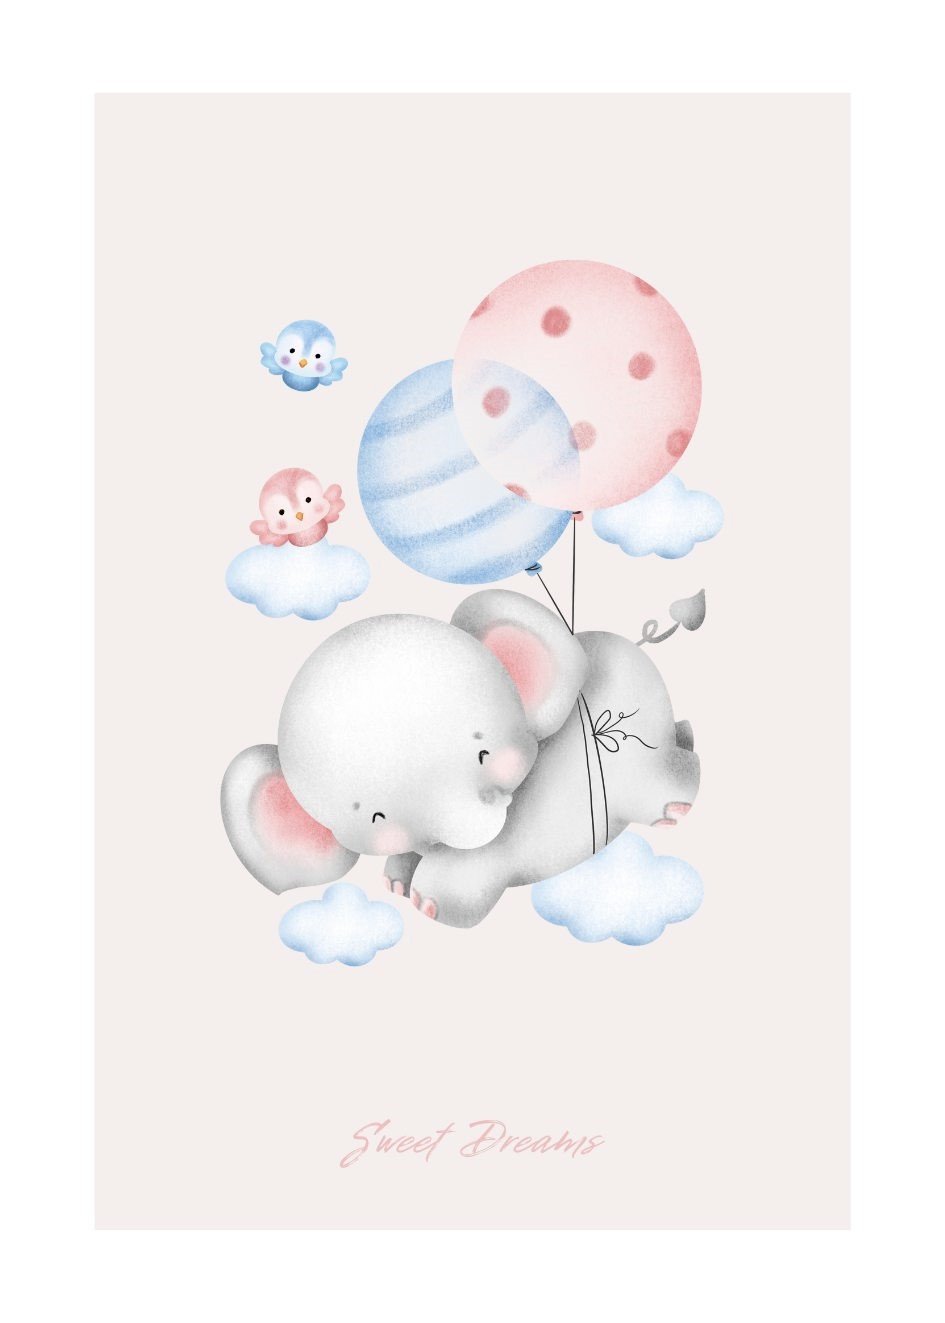 Elefant Sweet Dreams Poster